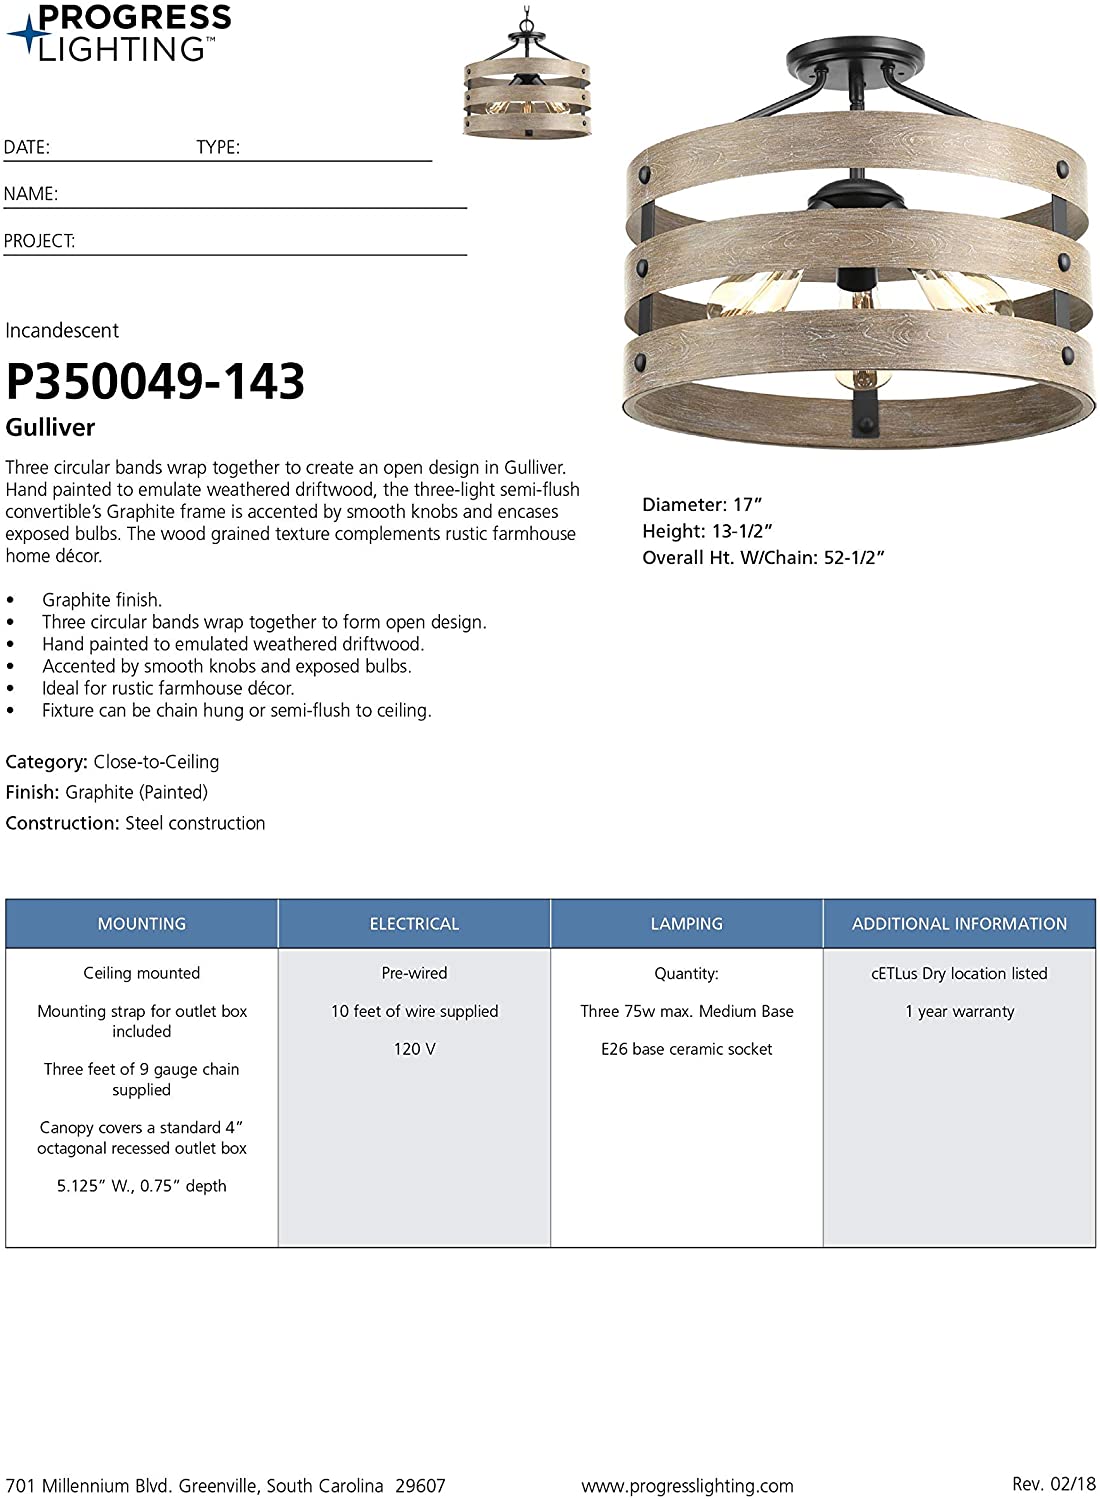 Progress Lighting P350049 143 Gulliver Three Light Semi Flush Convertible 9 Lamps Buy - Best Online Lighting Stores